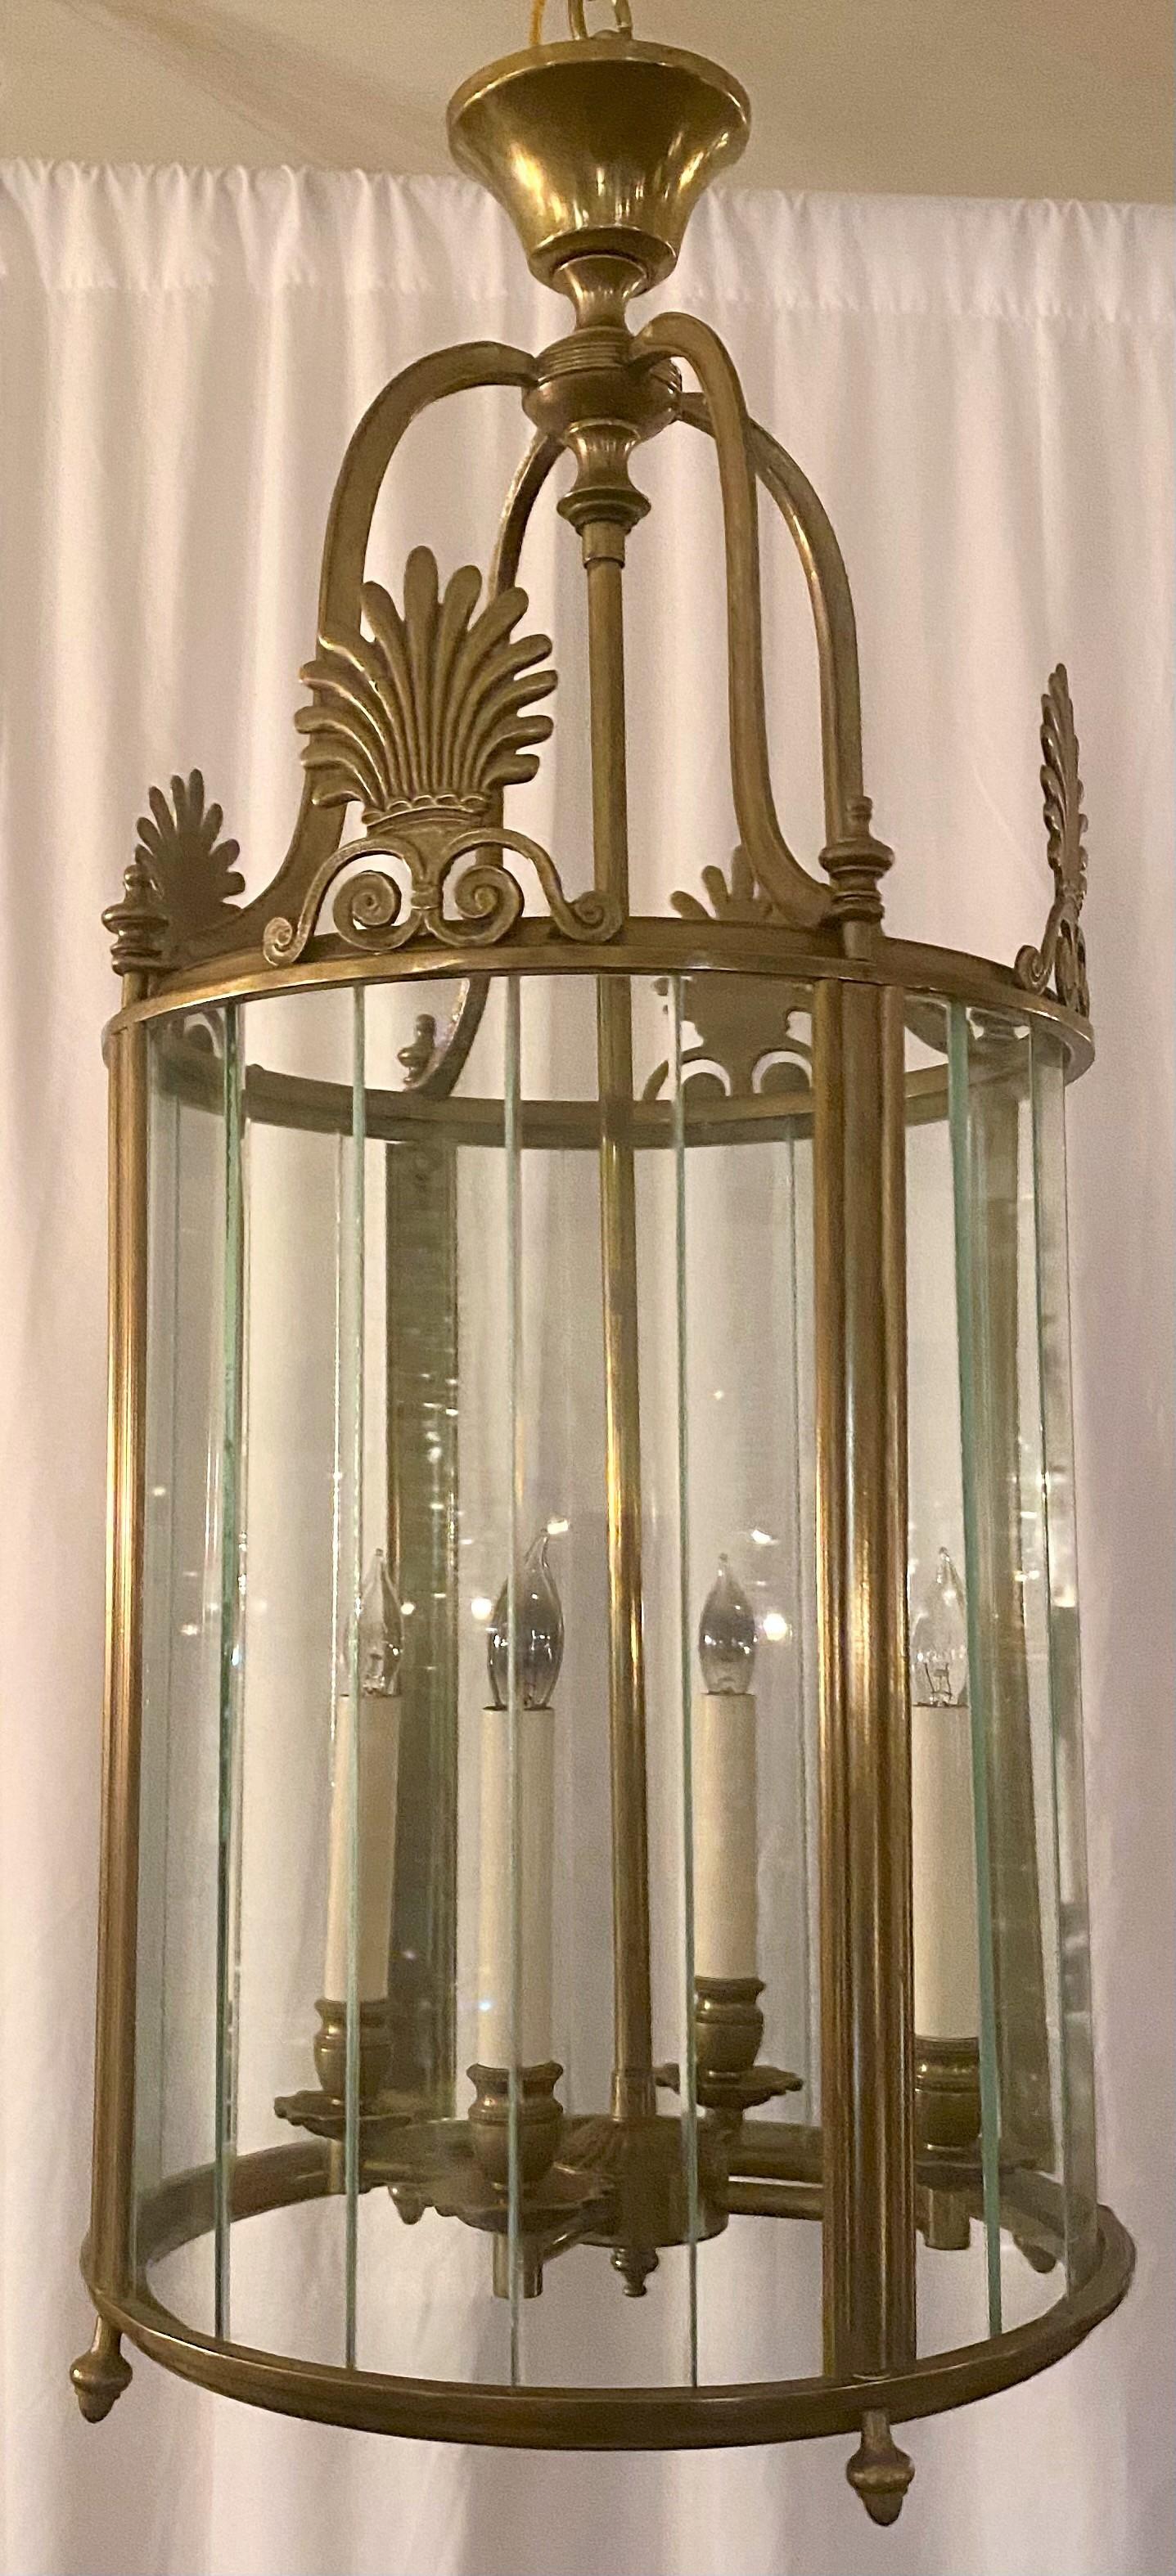 Antique early 20th century English gold bronze lantern, circa 1930s.
LAN025.